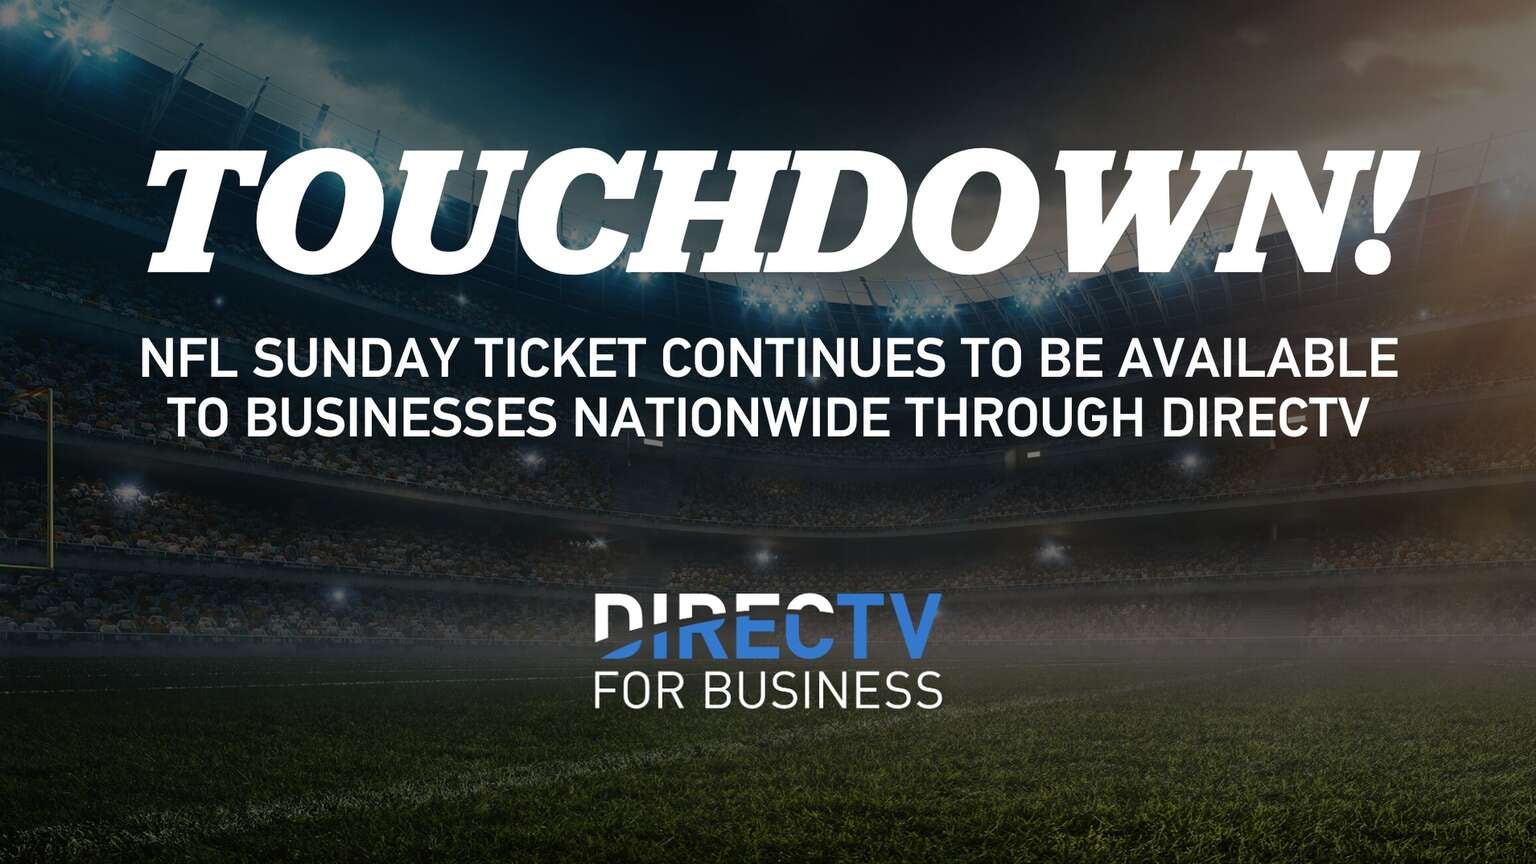 DIRECTV Will Retain NFL Sunday Ticket Rights for Bars, Restaurants